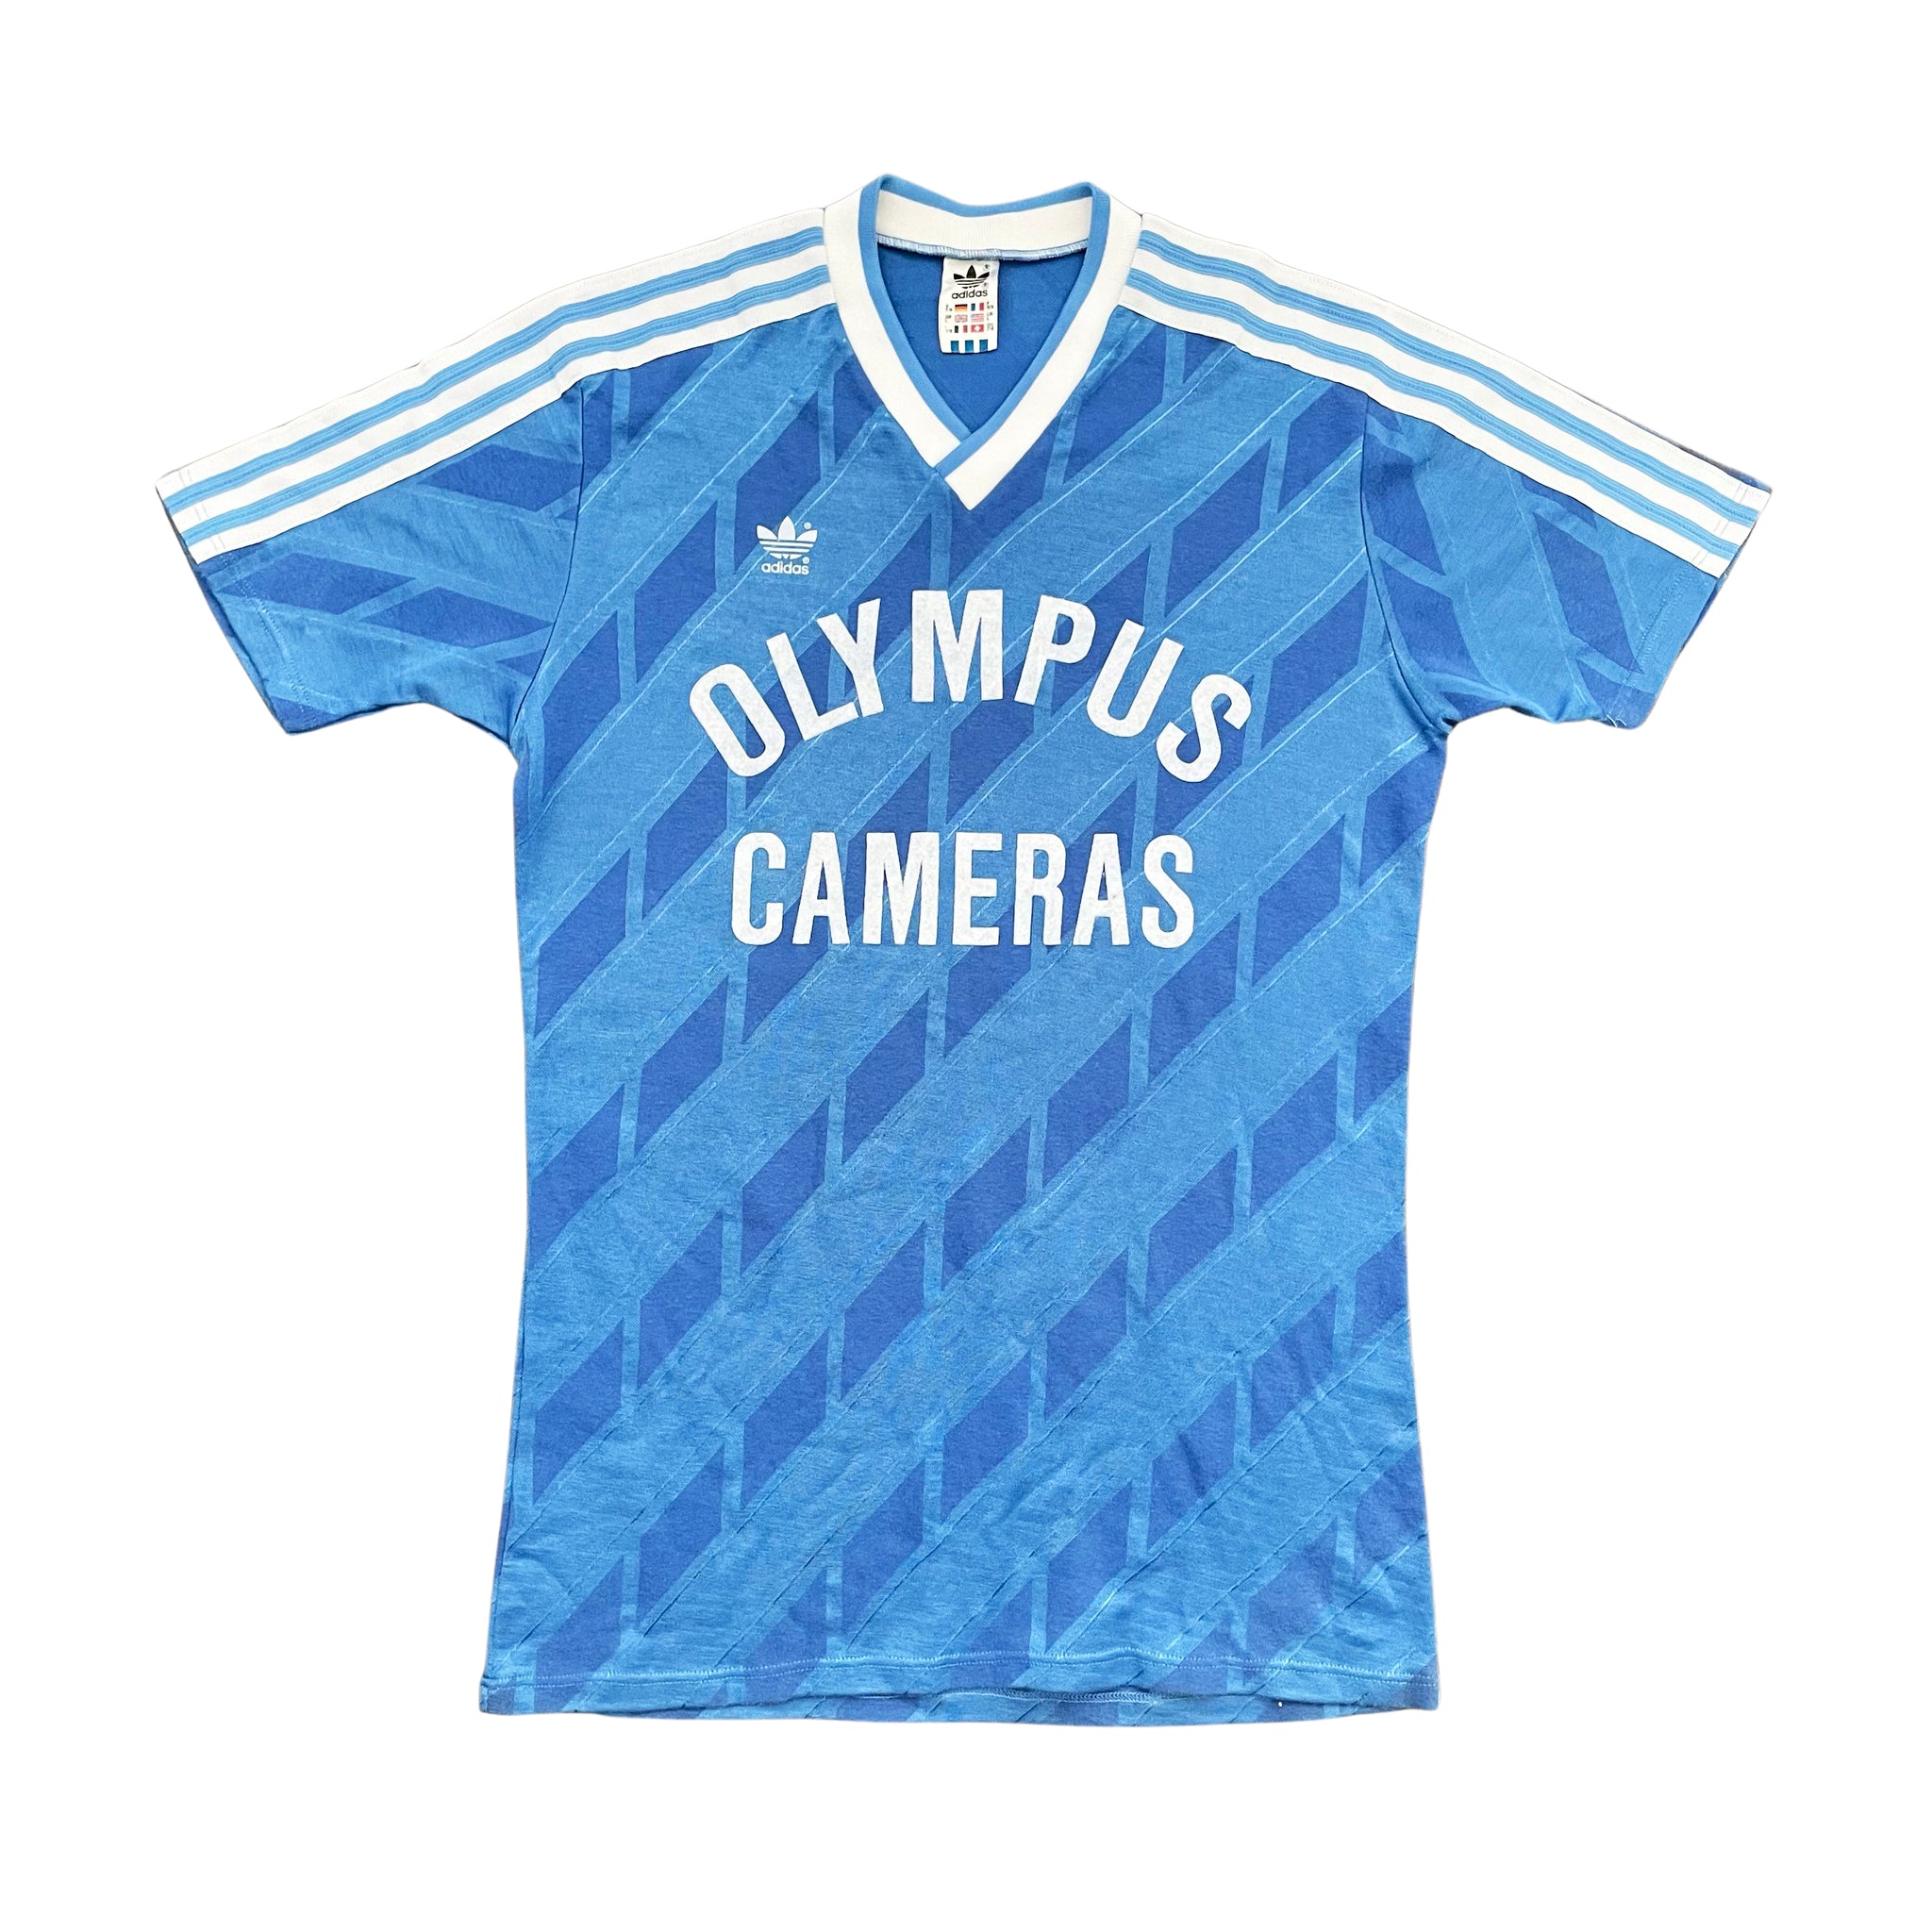 Adidas Olympus Cameras Jersey - M